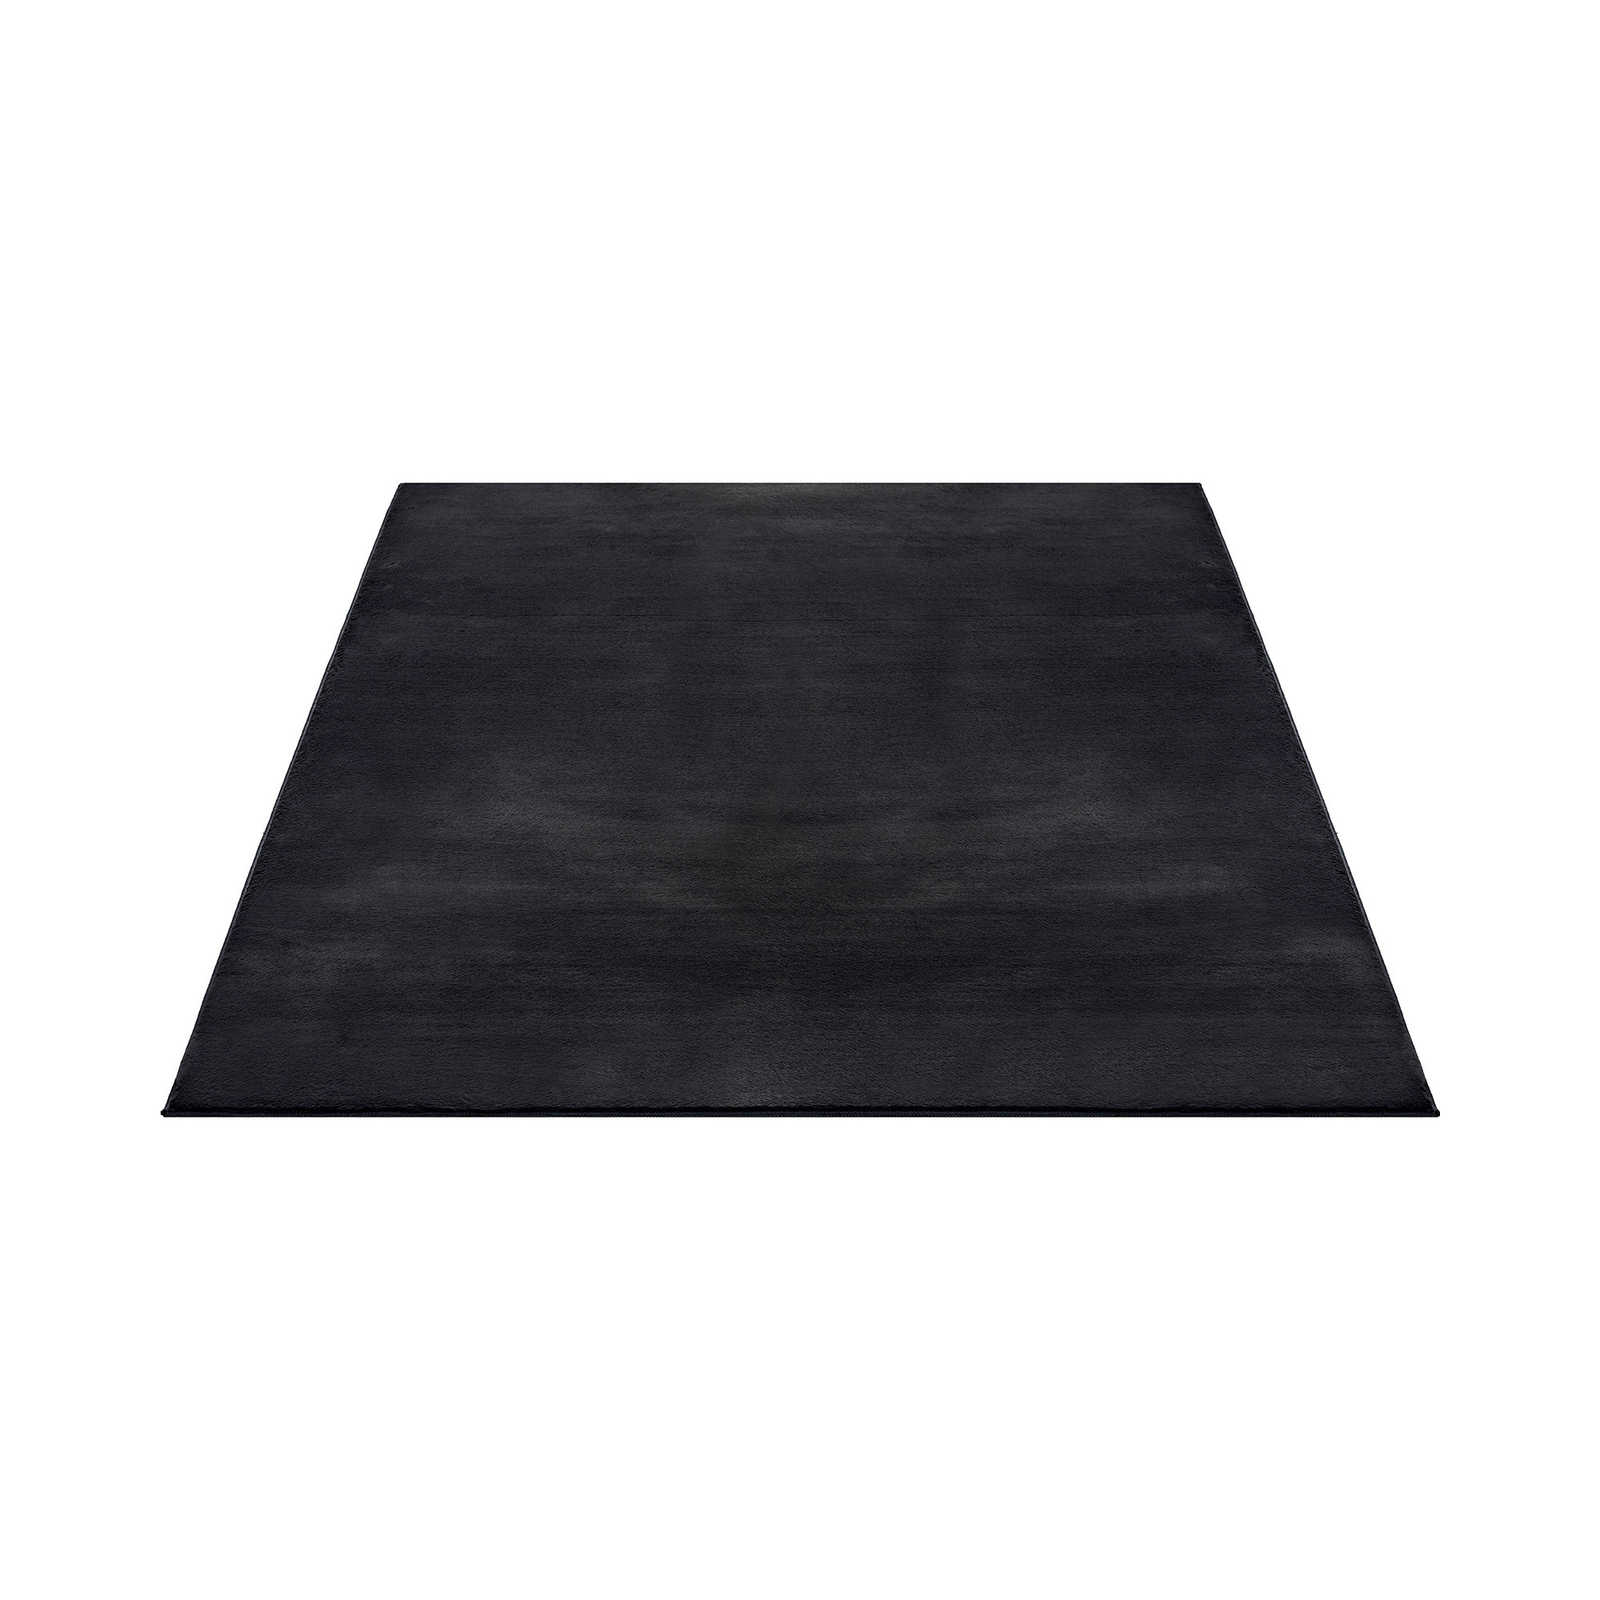 Cuddly soft high pile carpet in black - 280 x 200 cm
